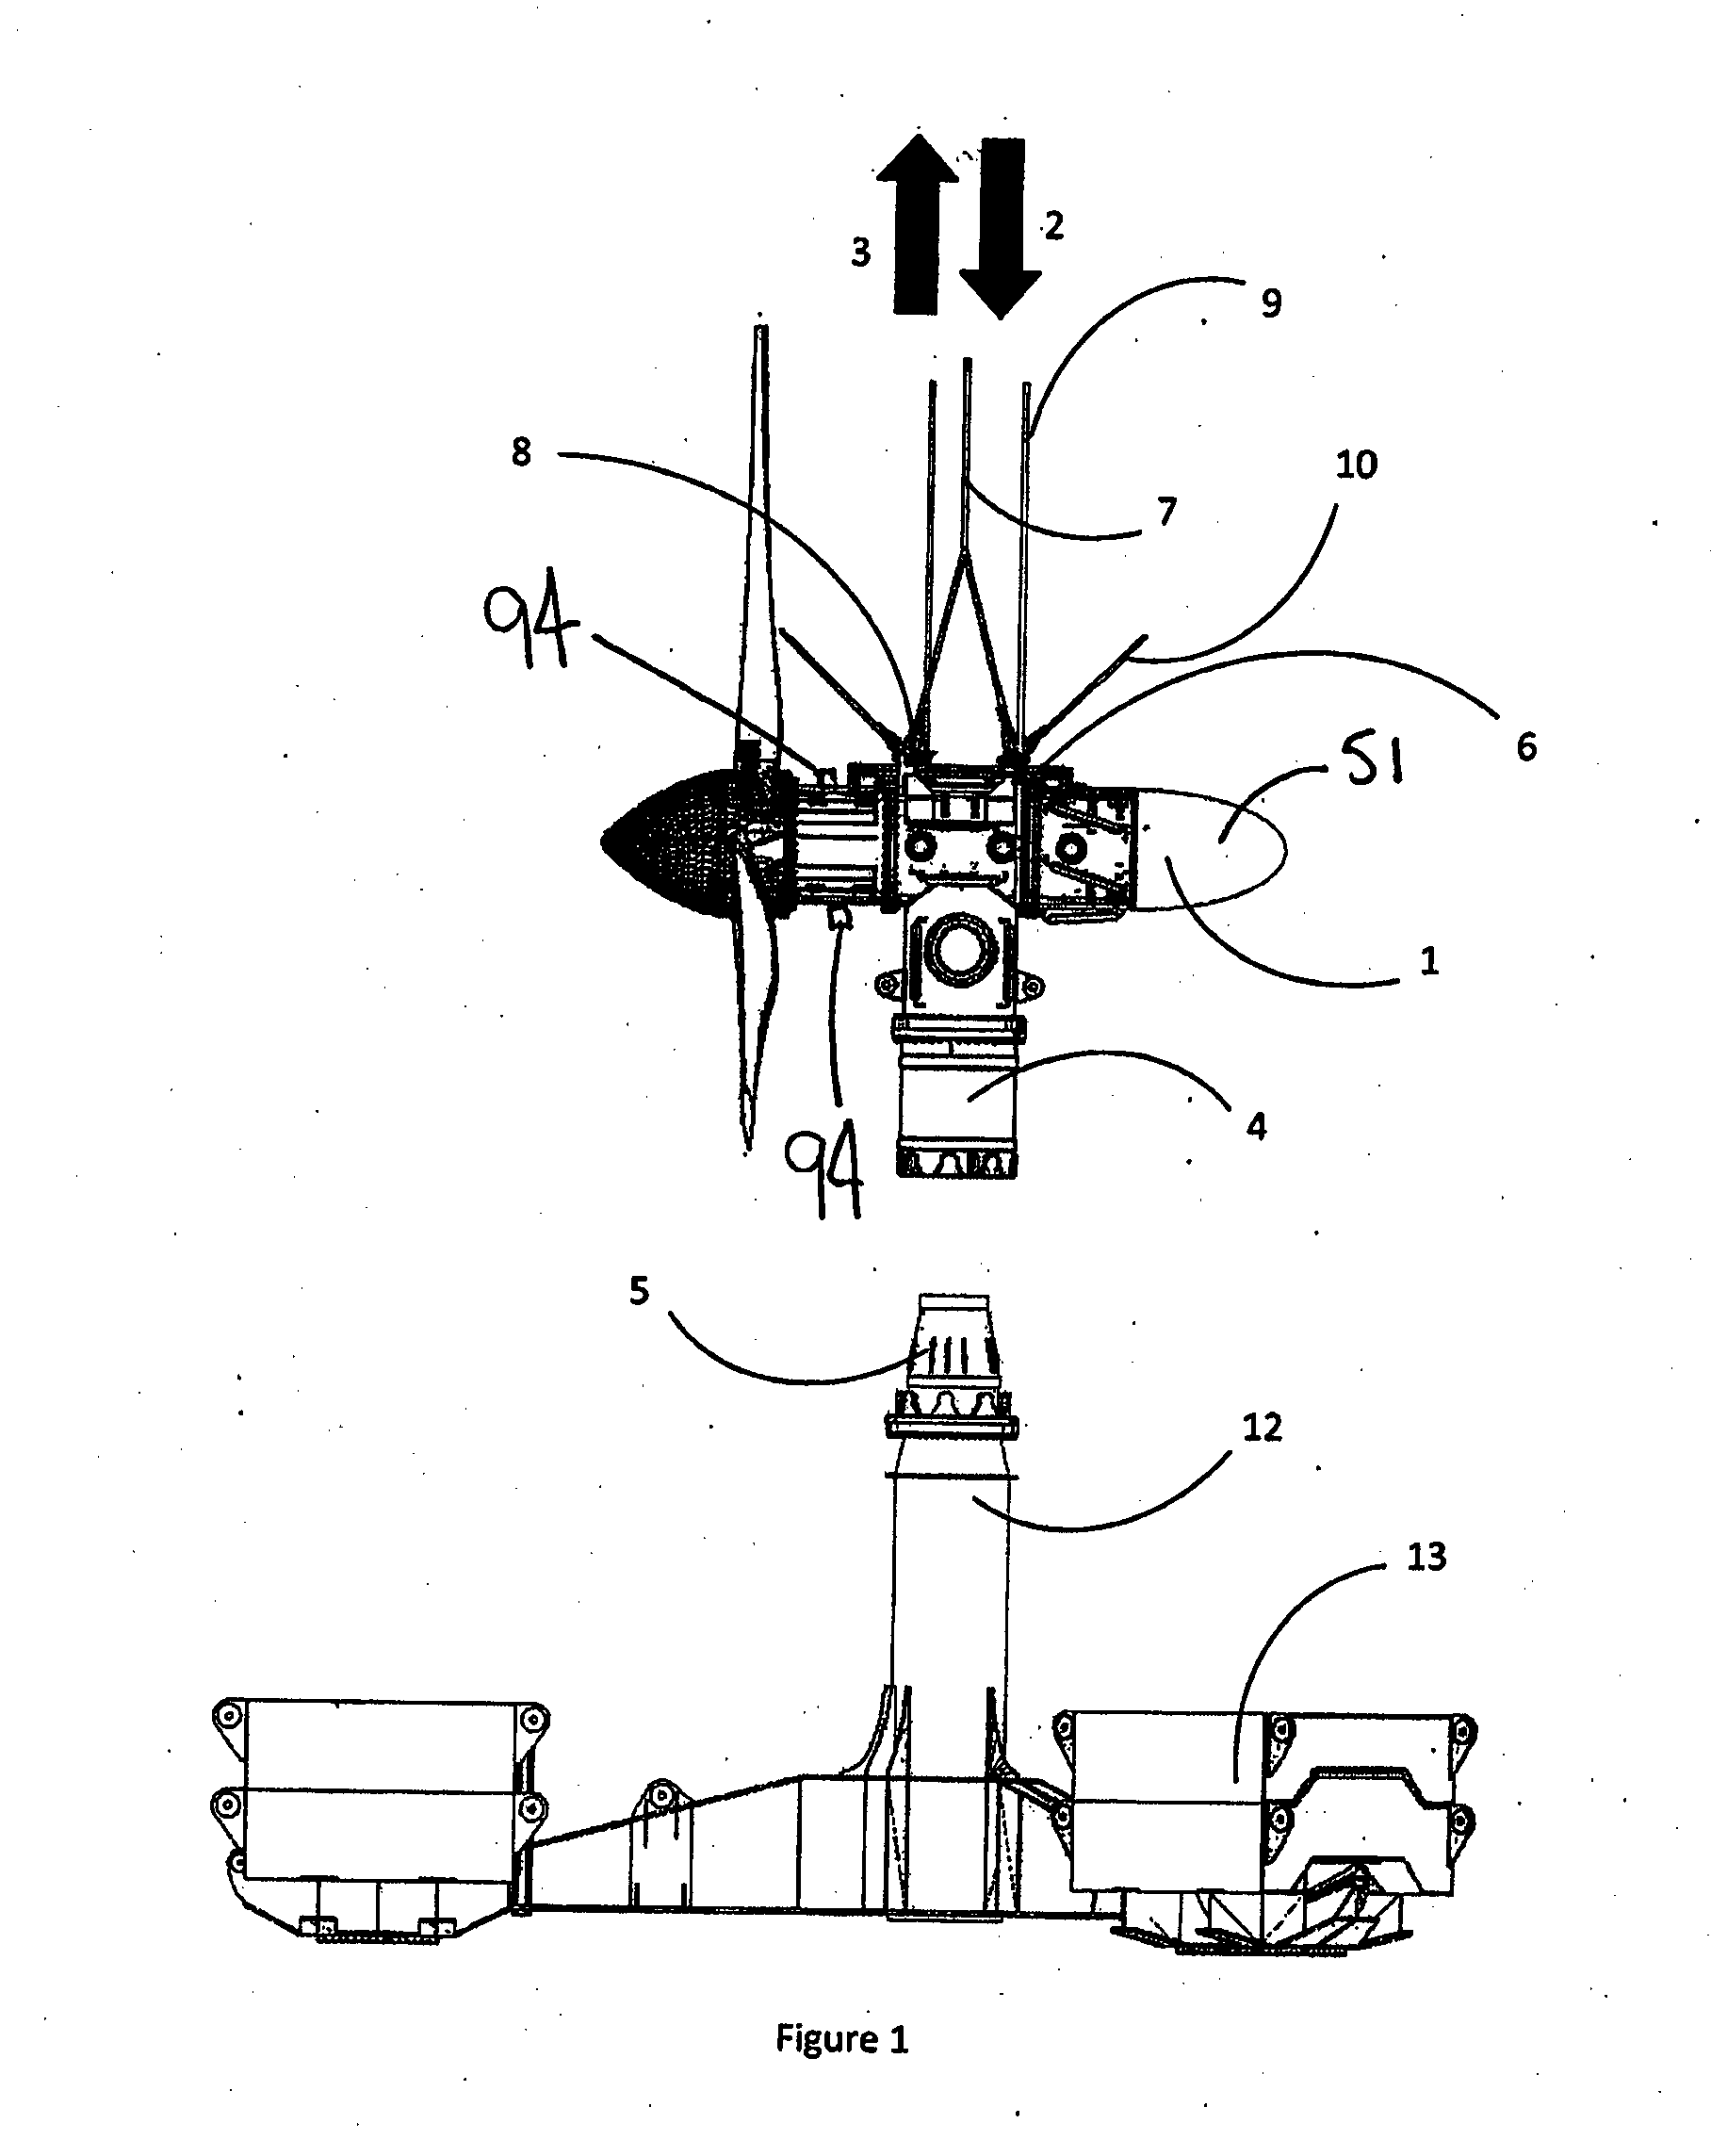 Deployment apparatus and method of deploying an underwater power generator